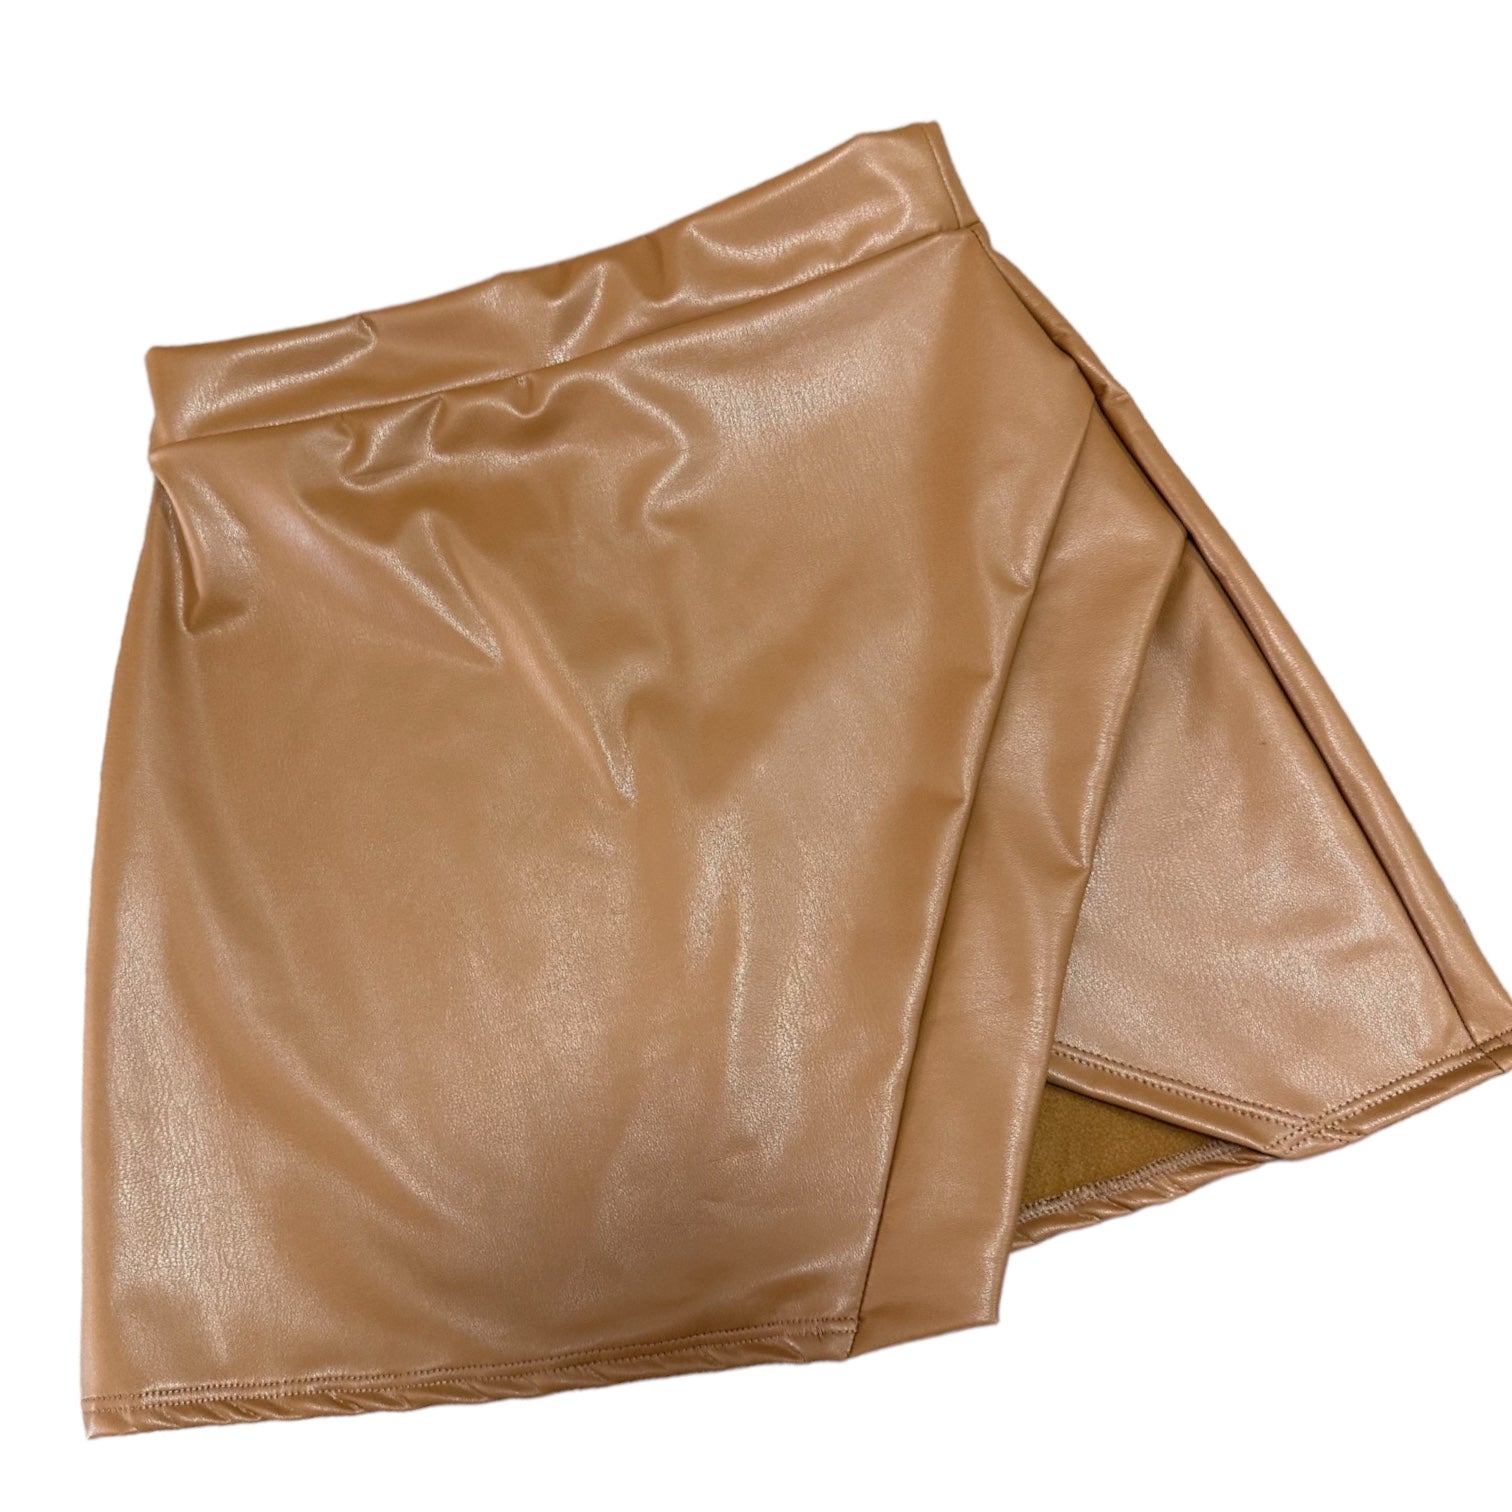 Leather Envelope Skirt in Camel